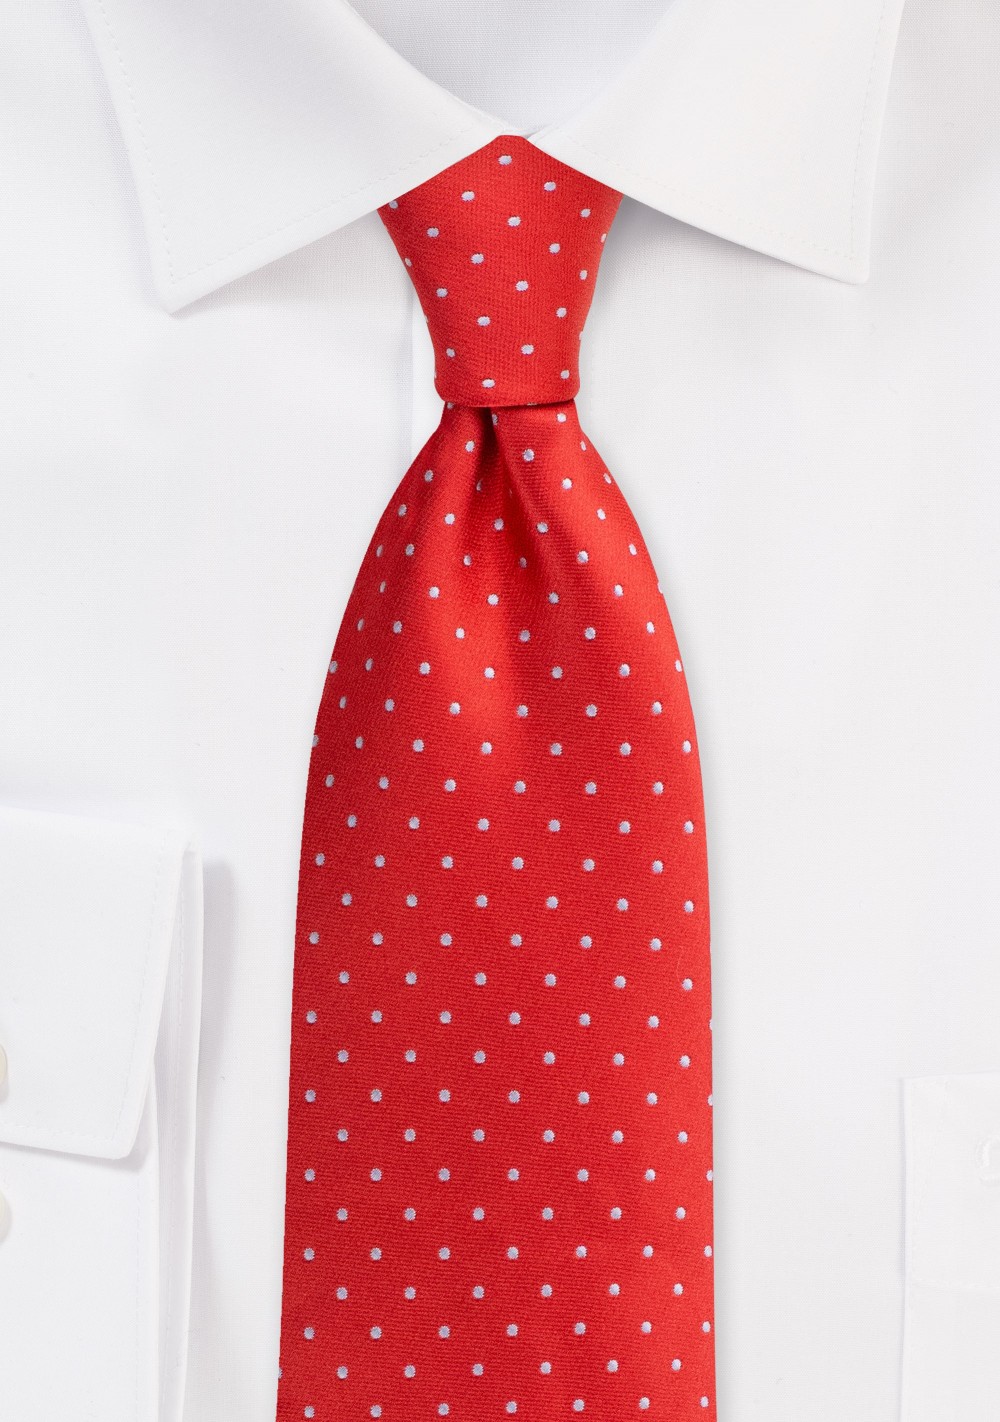 Polka Dot Tie in Cherry | Mens Necktie ...